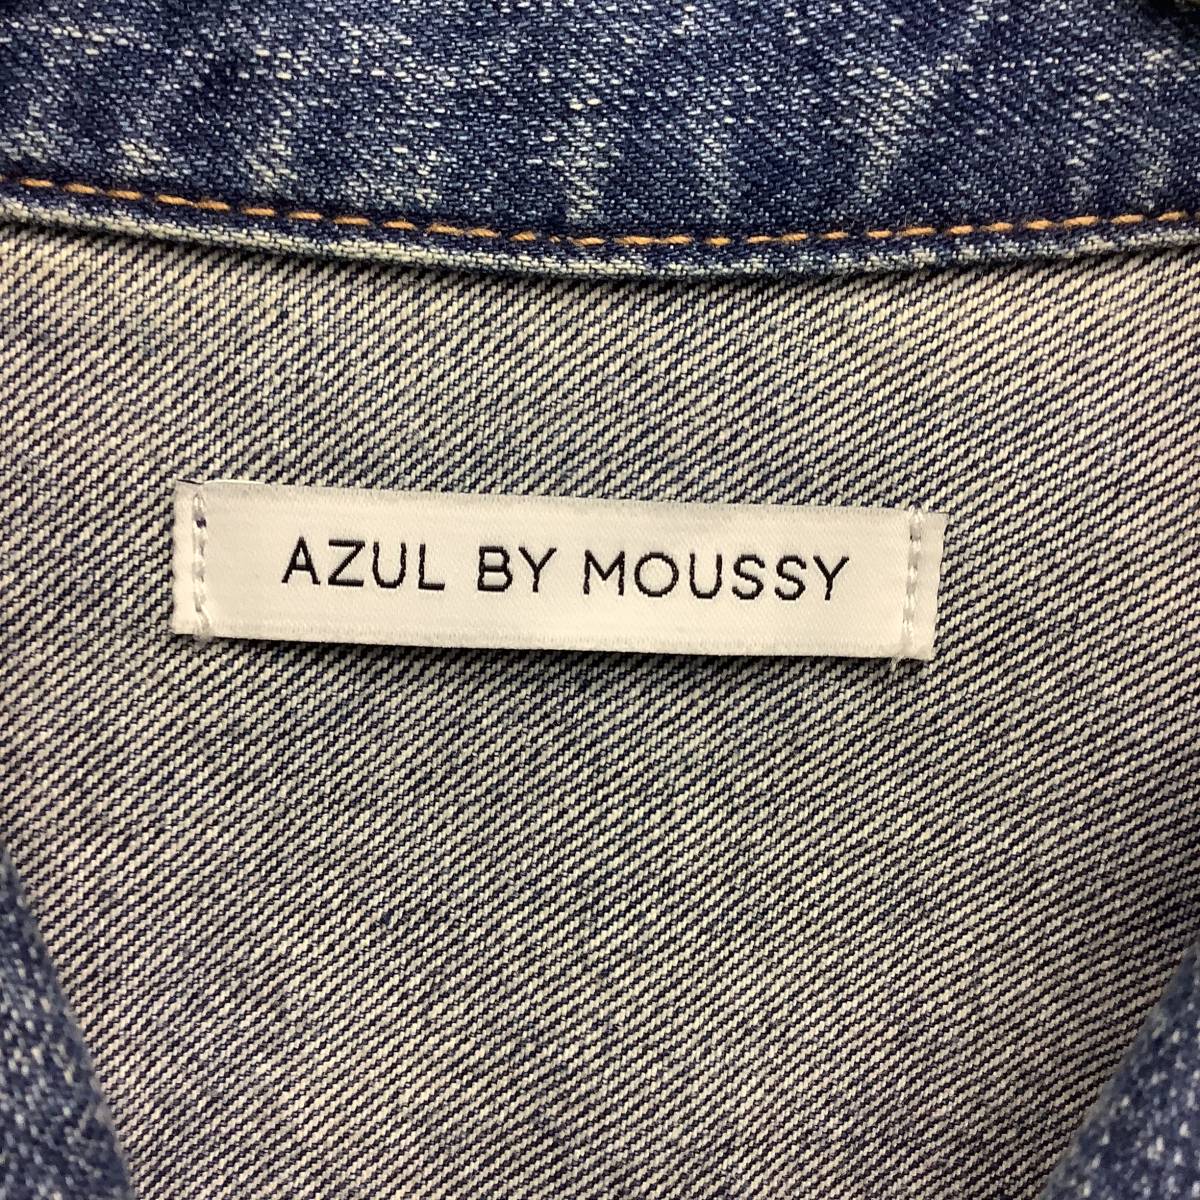 A379*AZUL BY MOUSSY | azur bai Moussy Denim jacket size S